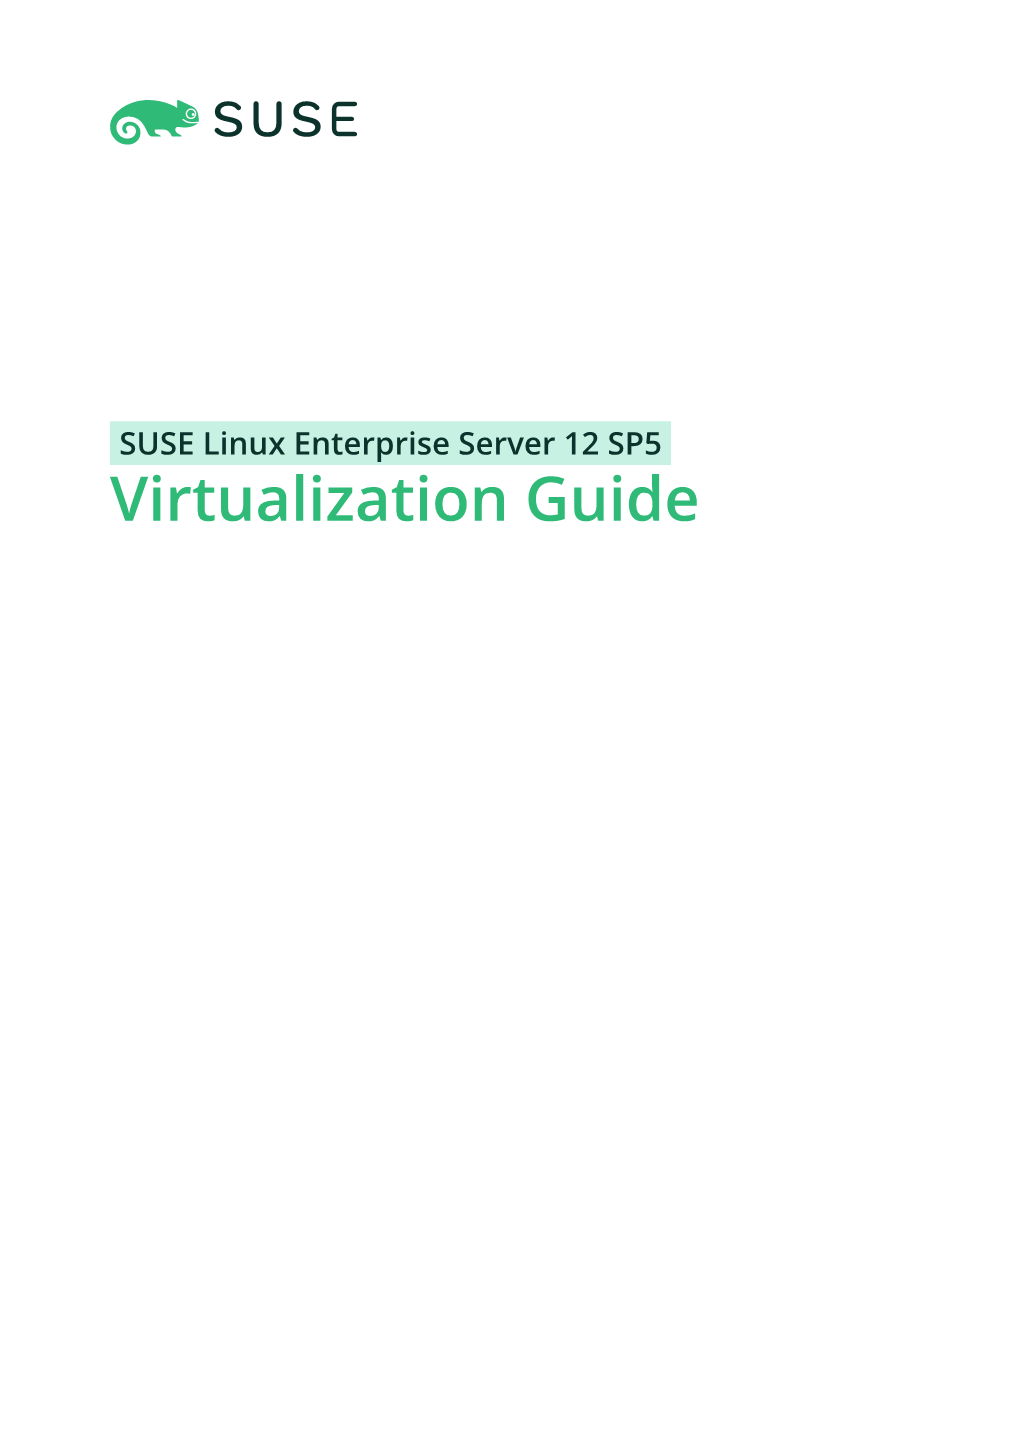 SUSE Linux Enterprise Server 12 SP5 Virtualization Guide Virtualization Guide SUSE Linux Enterprise Server 12 SP5